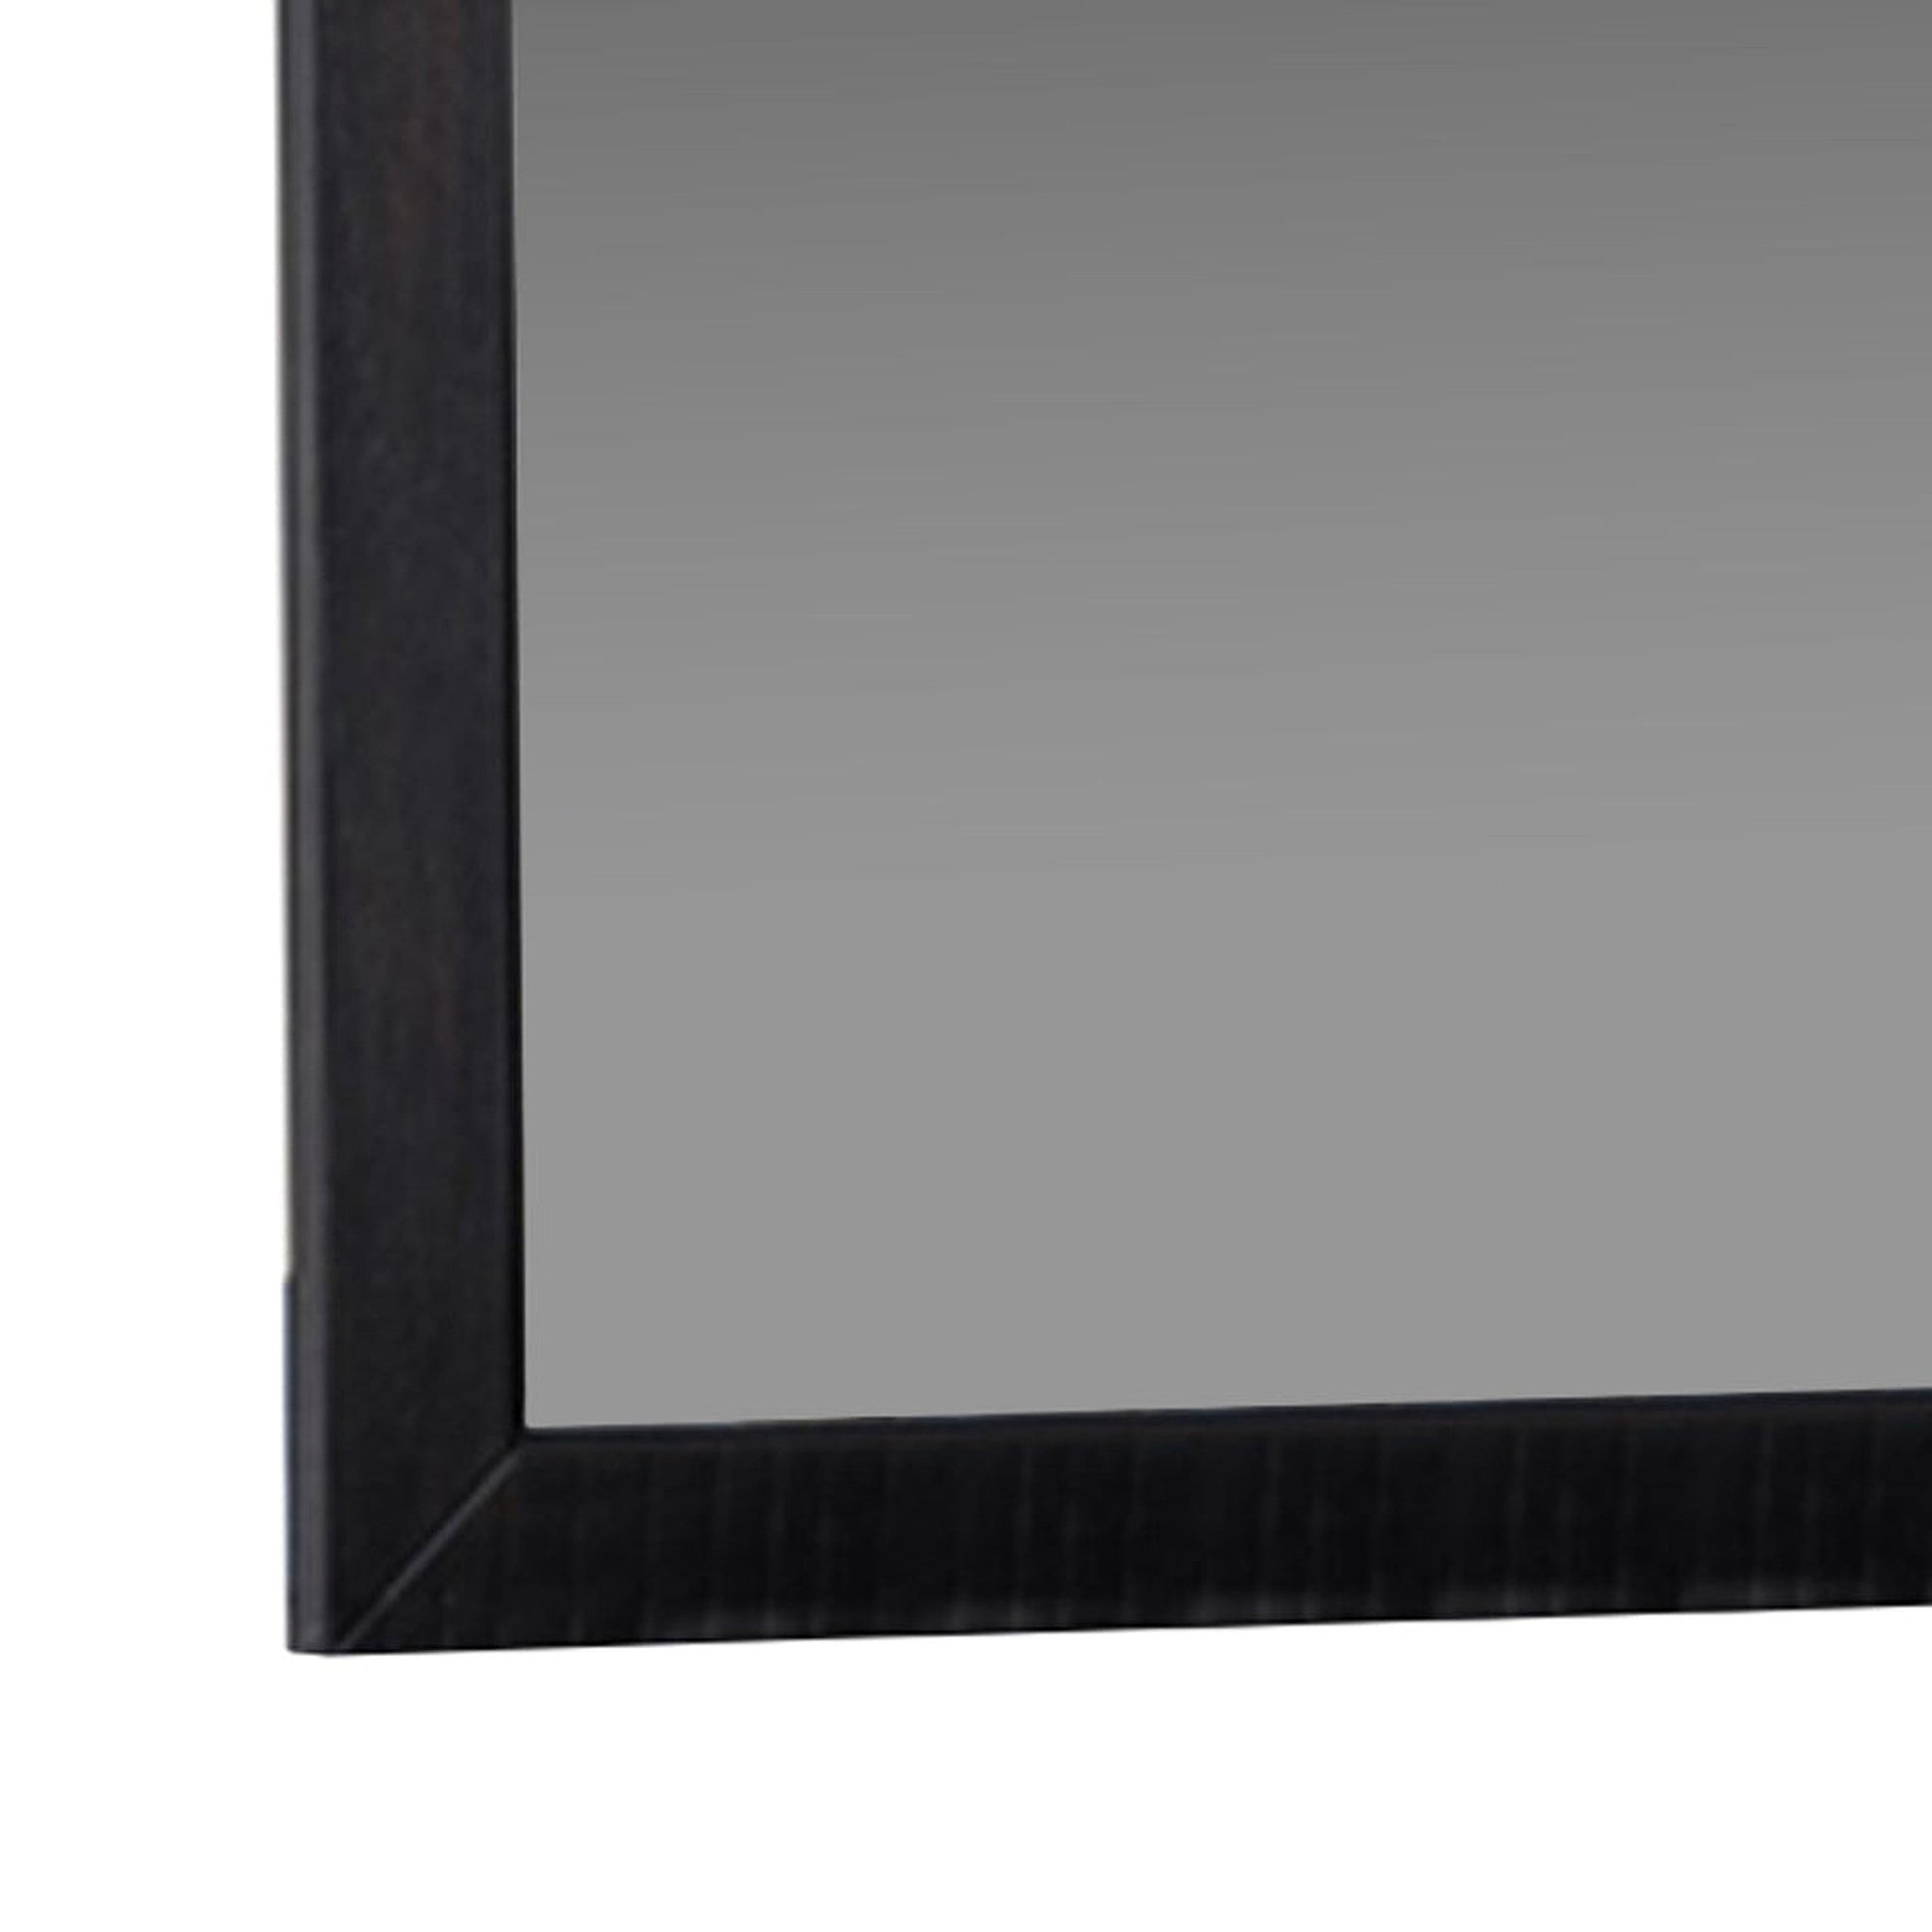 Benzara Antique Black Contemporary Style Rectangular Mirror With Wooden Frame